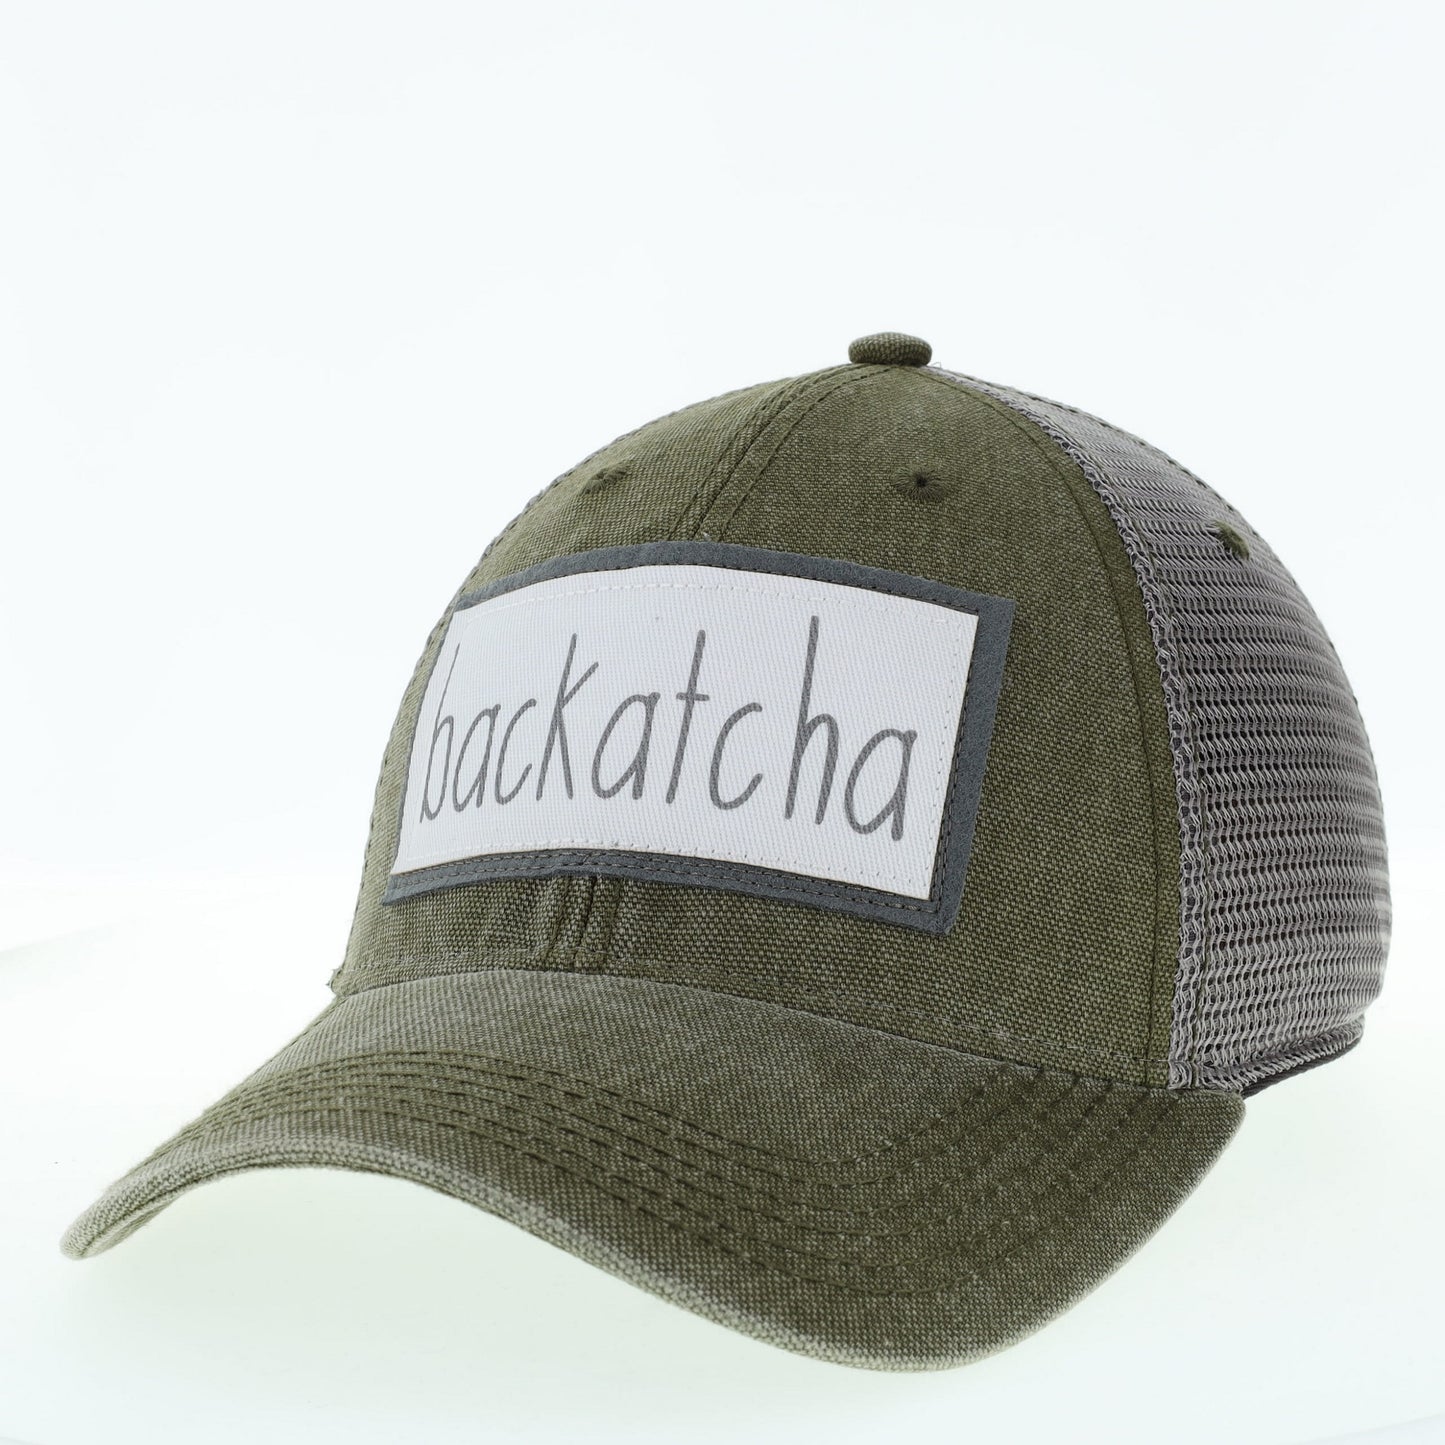 Backatcha Dashboard Trucker Hat in Olive/Grey